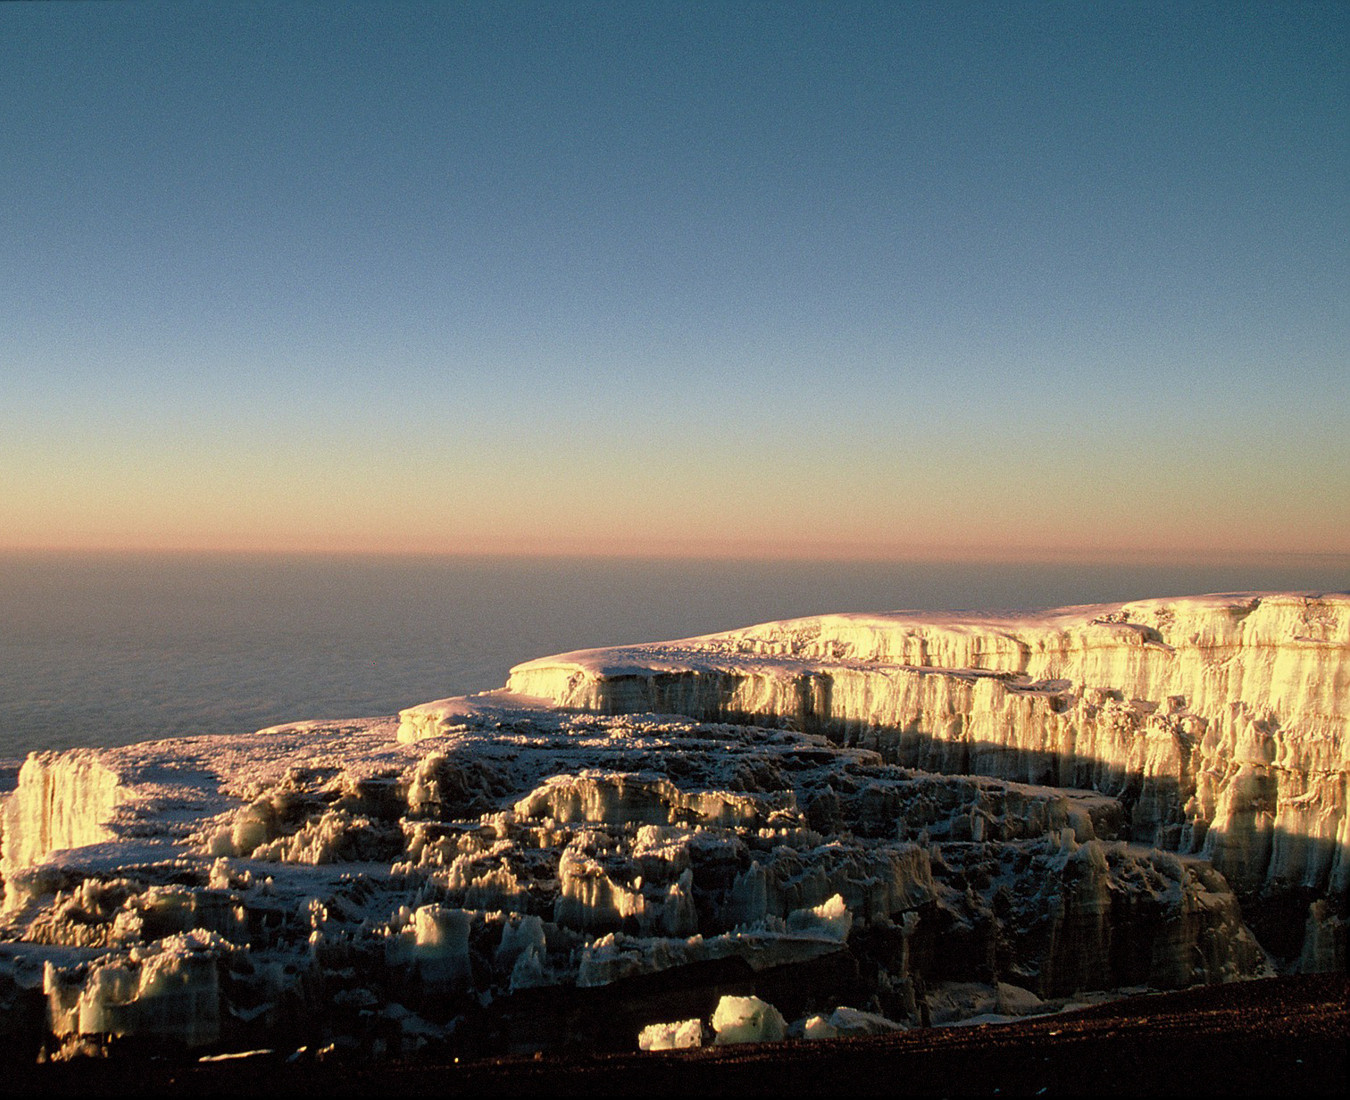 Sunrise across the spectacular Kilimanjaro icecap.